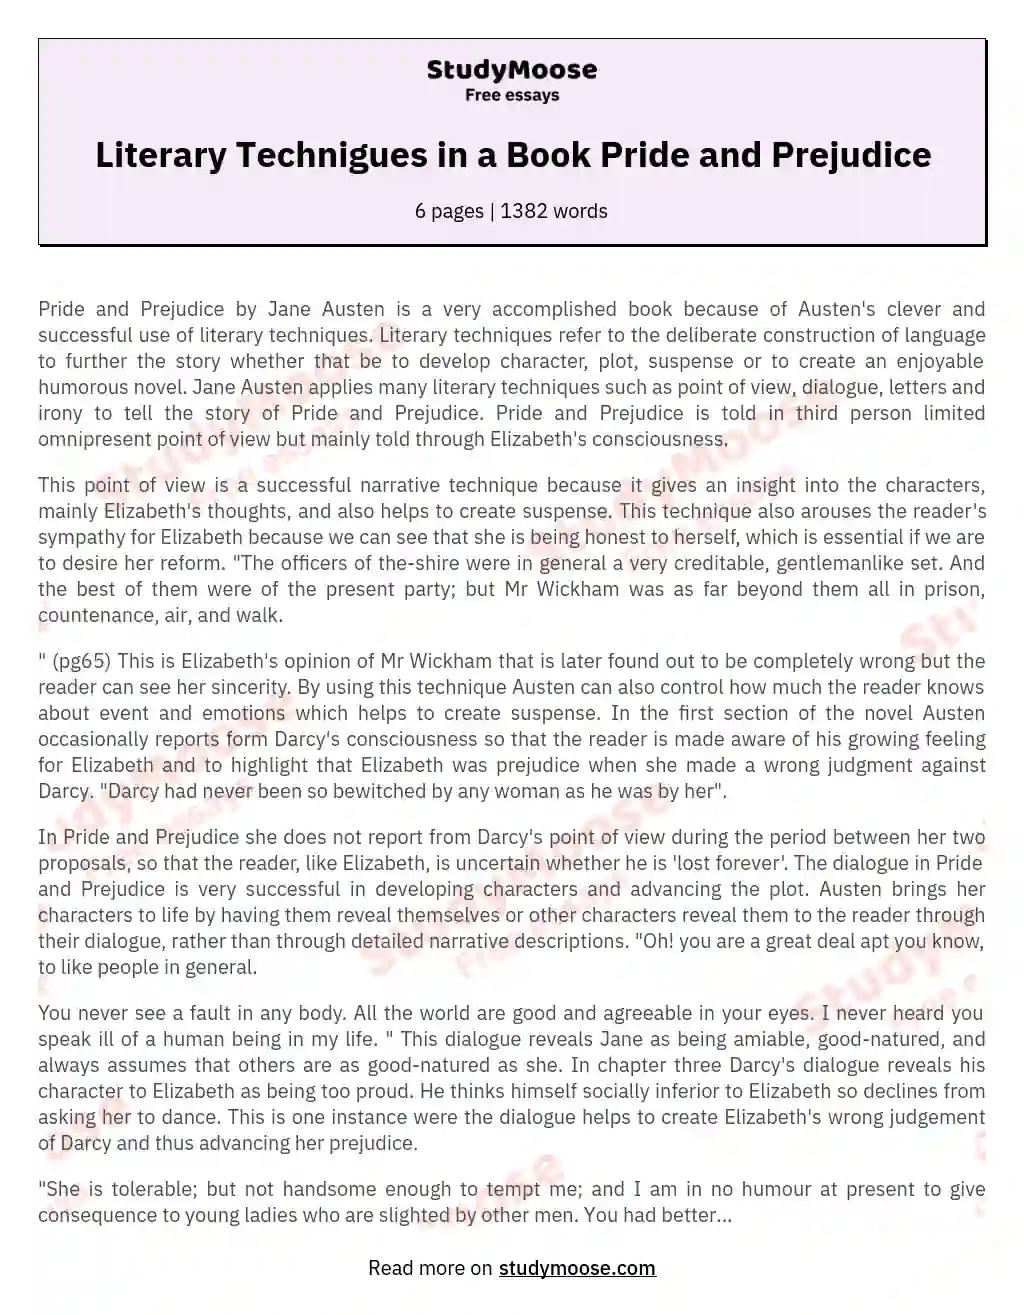 Literary Technigues in a Book Pride and Prejudice essay